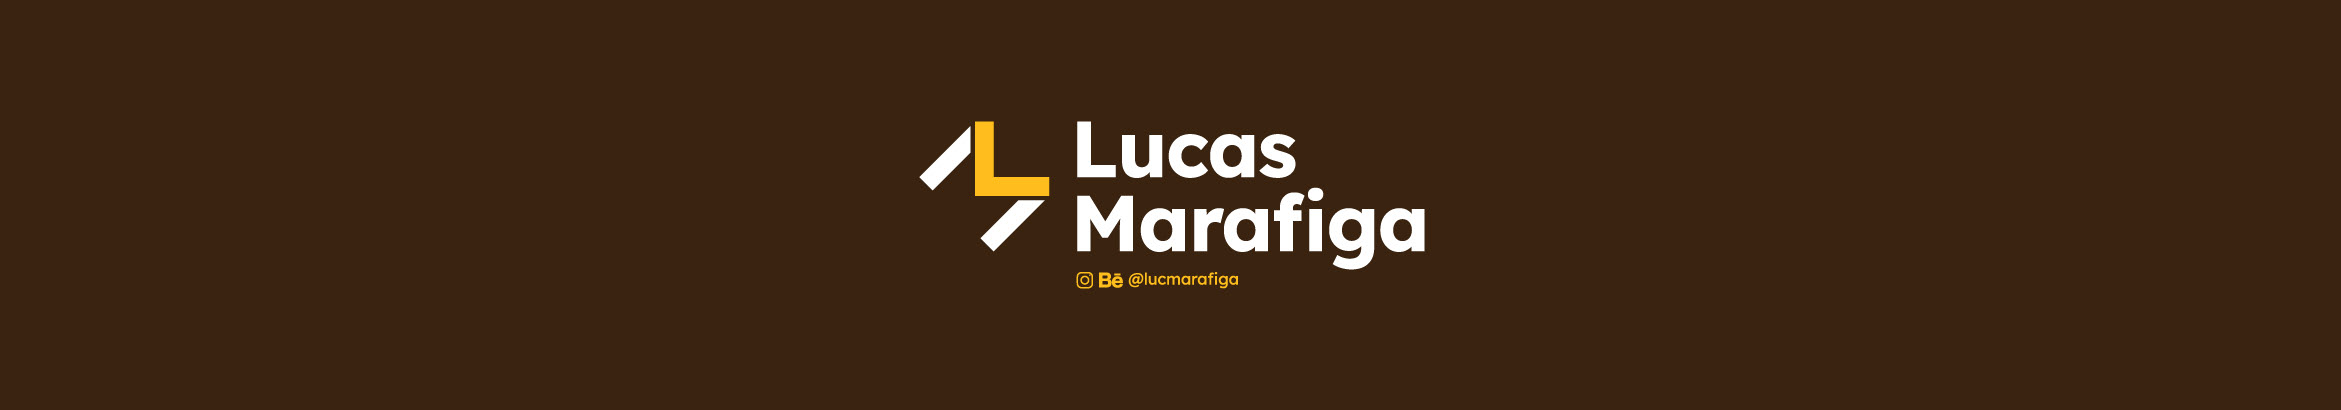 Lucas Marafiga's profile banner